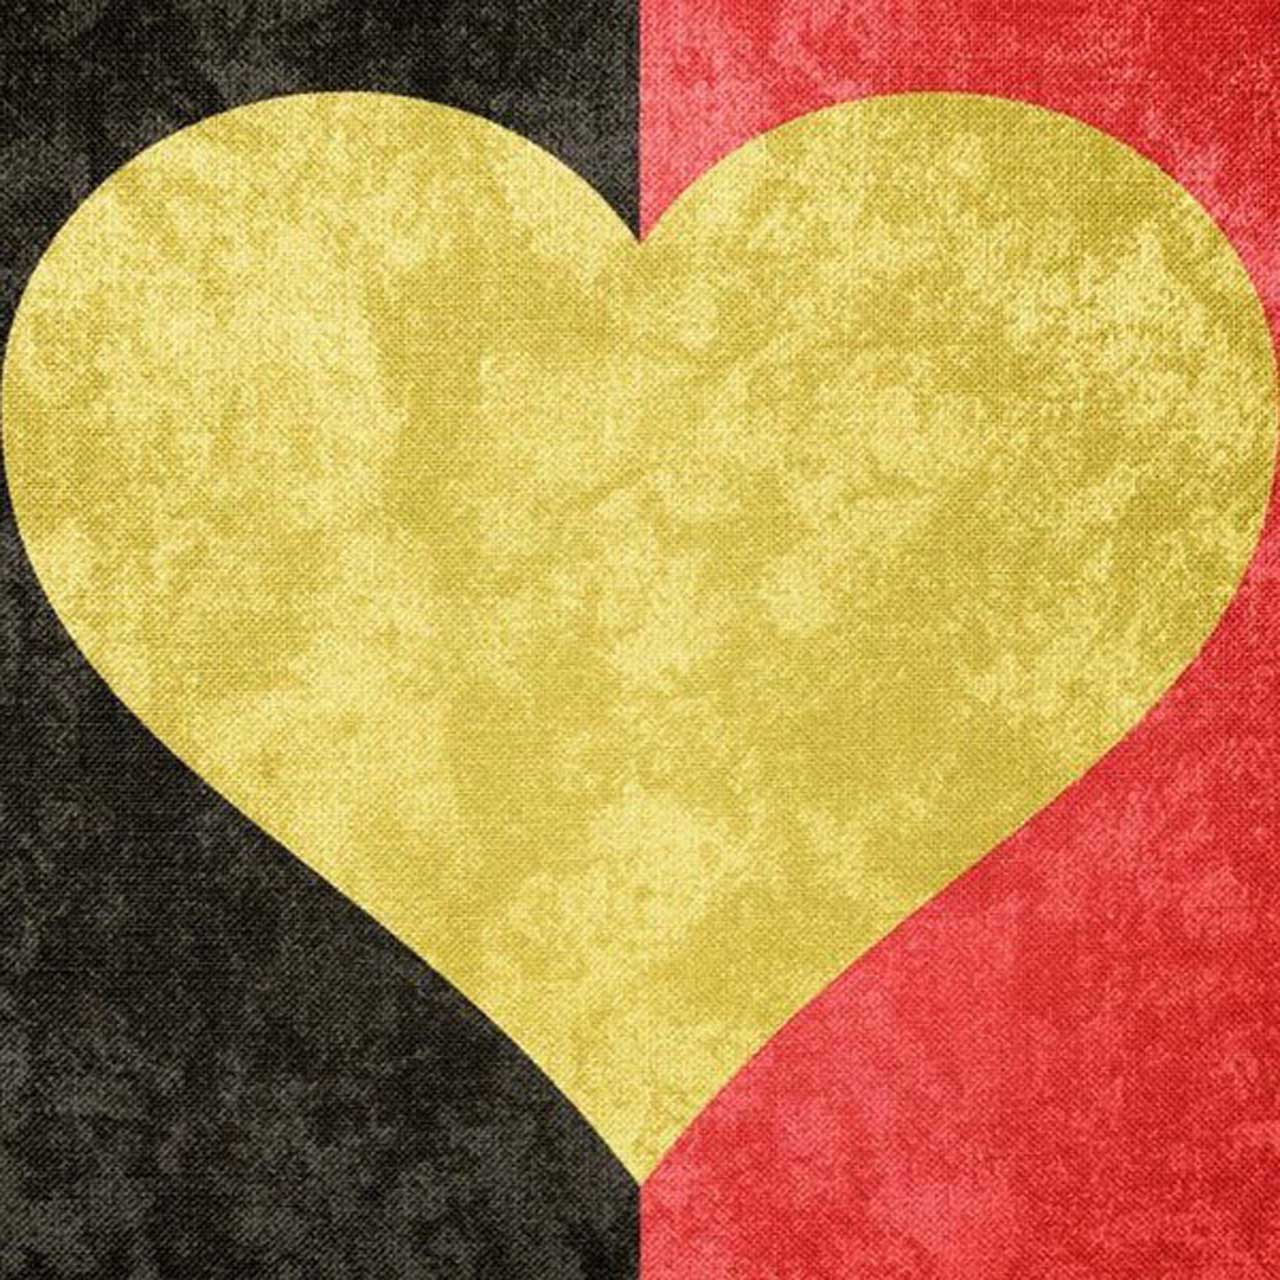 Belgian Red Devils tweet support for terror victims